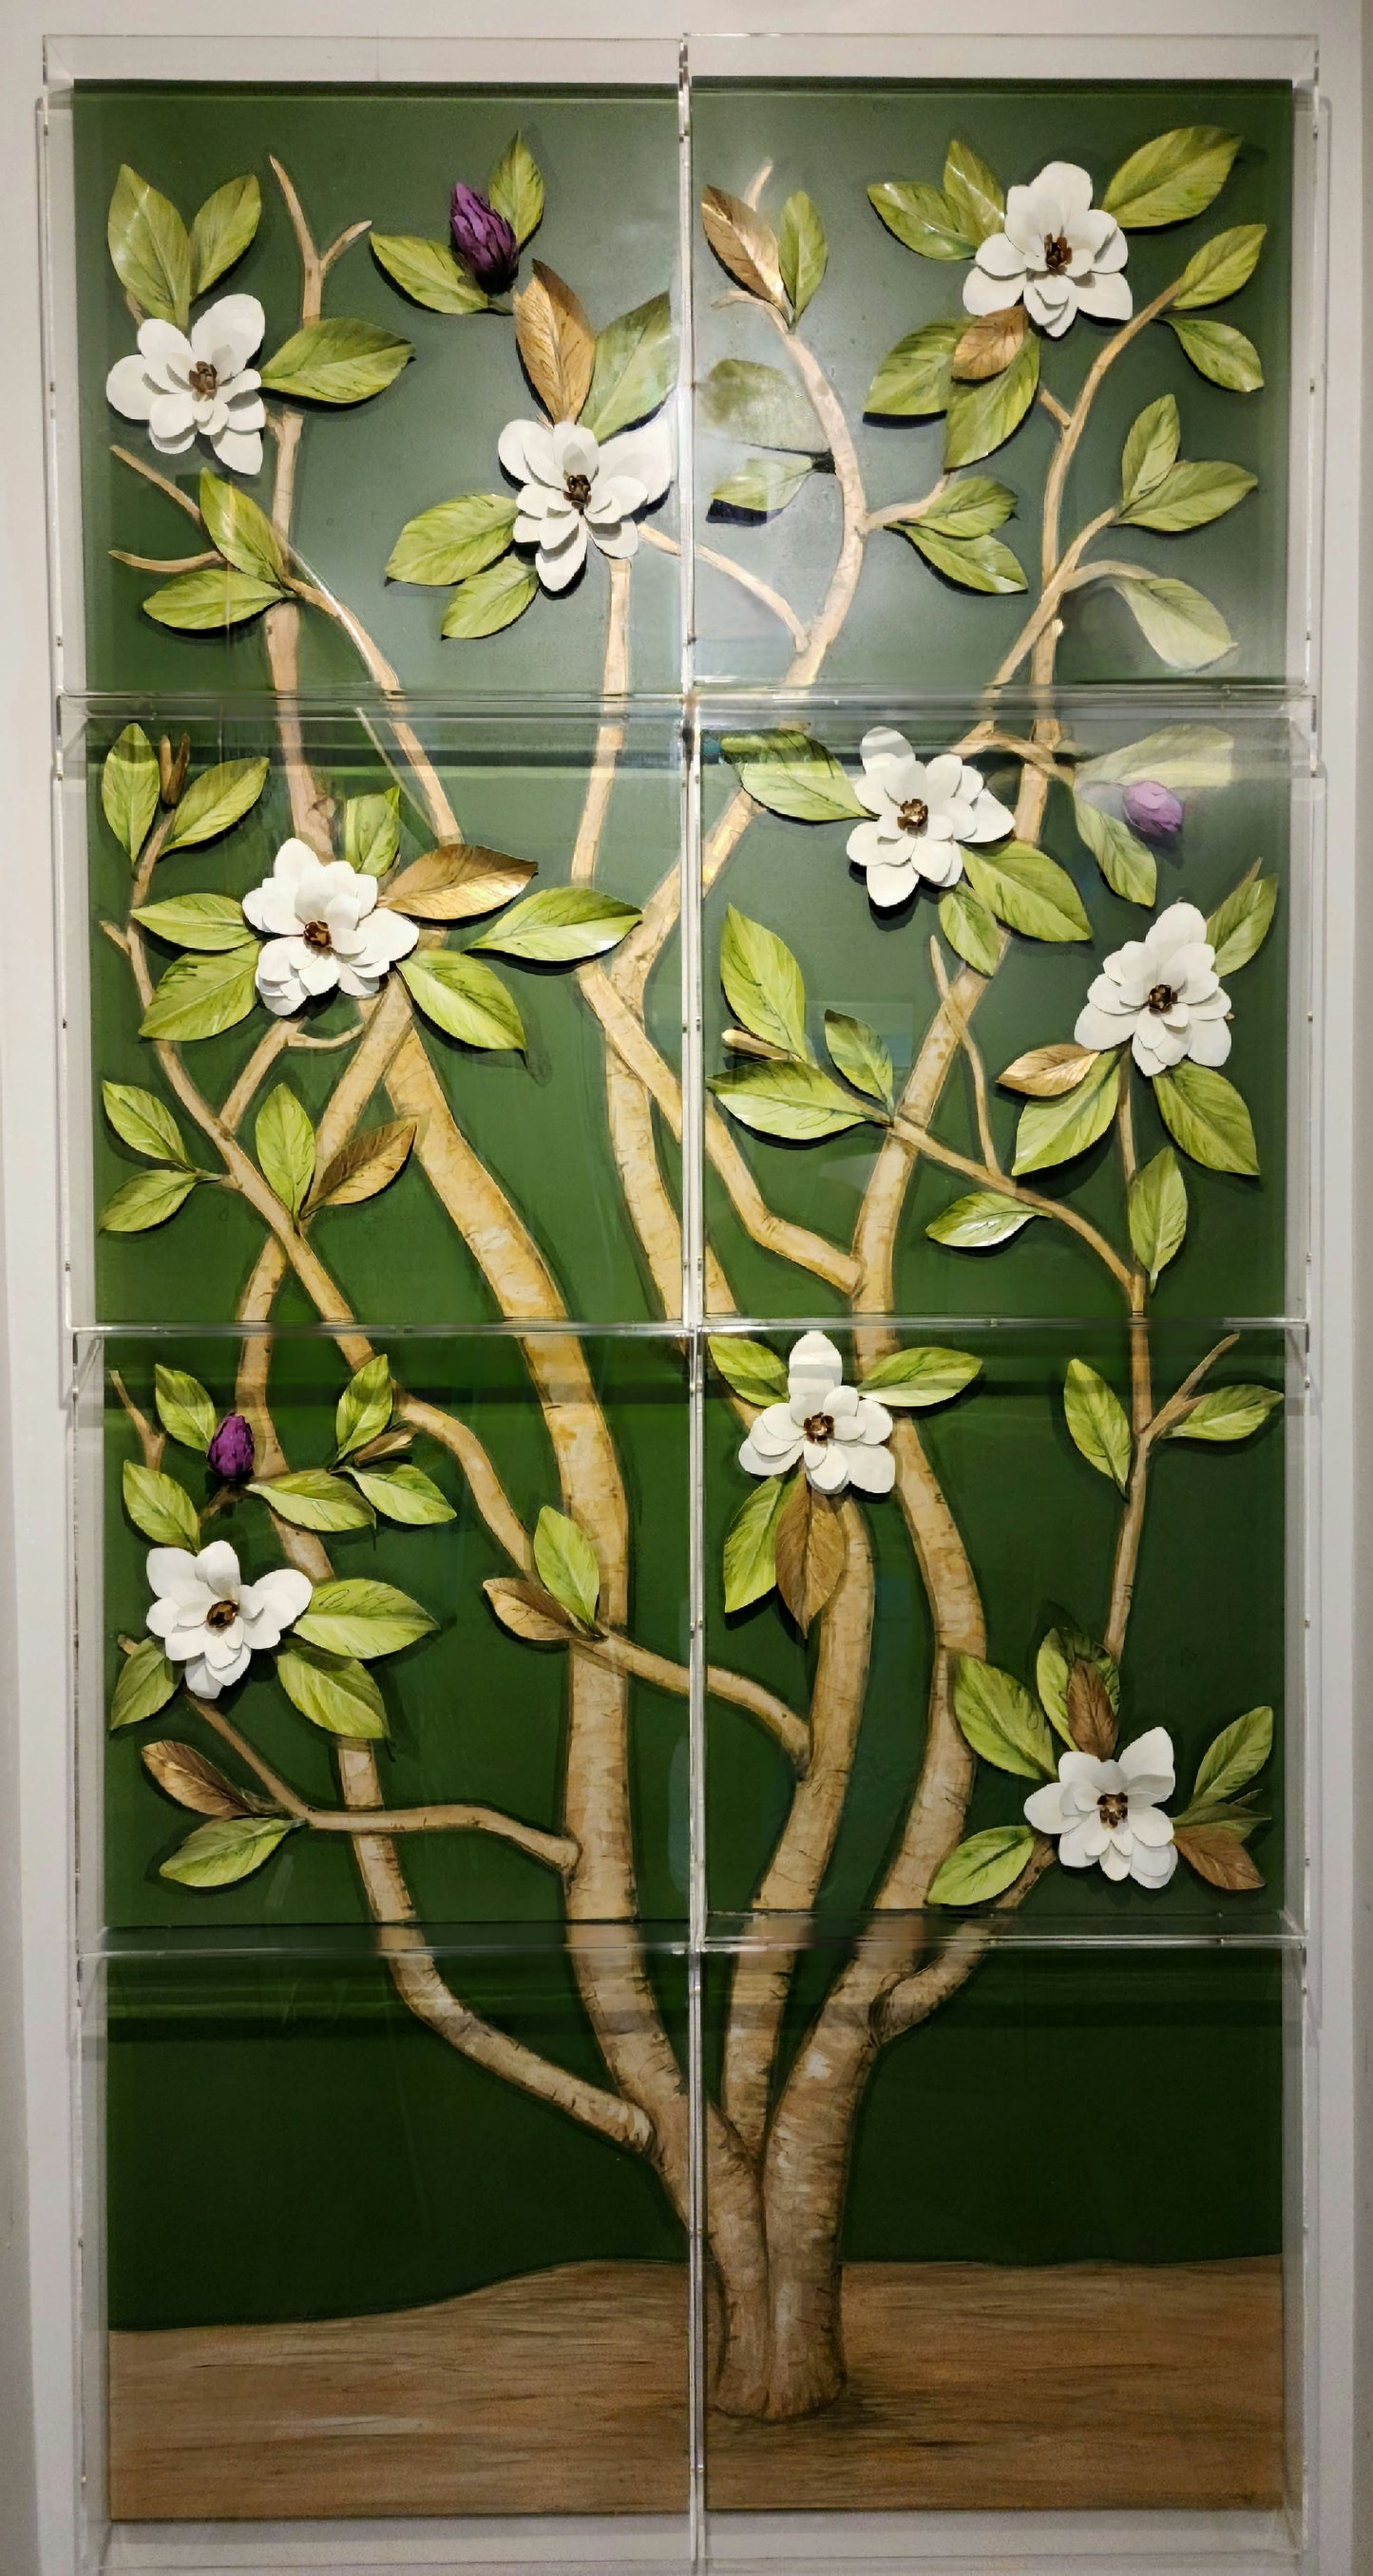 Magnolia Tree Panel Installation